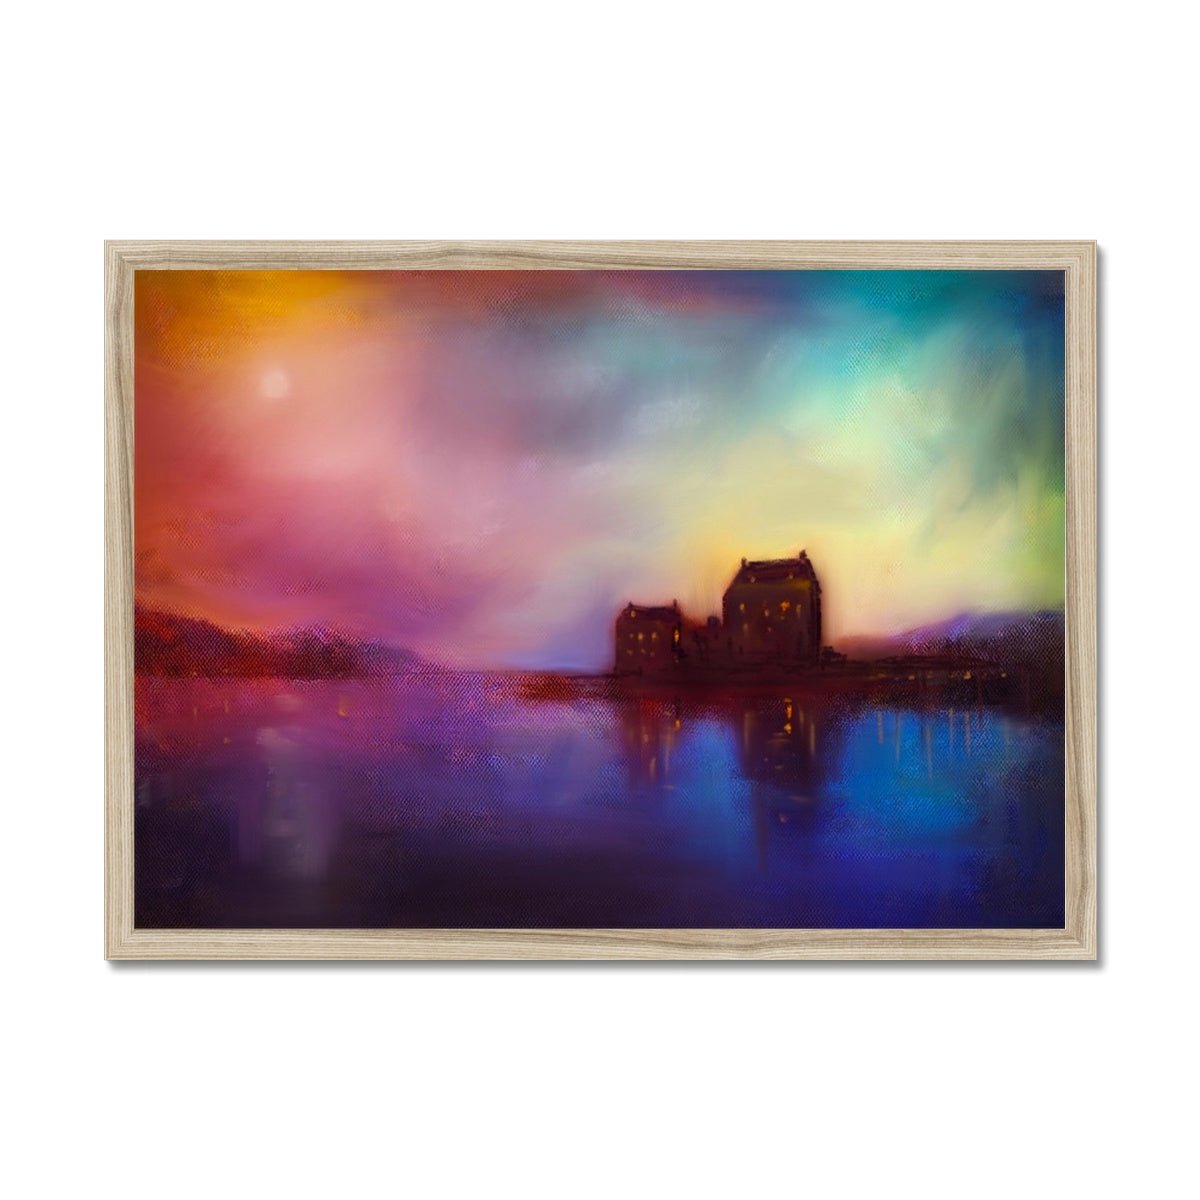 Eilean Donan Castle Sunset Painting | Framed Prints From Scotland-Framed Prints-Historic & Iconic Scotland Art Gallery-A2 Landscape-Natural Frame-Paintings, Prints, Homeware, Art Gifts From Scotland By Scottish Artist Kevin Hunter